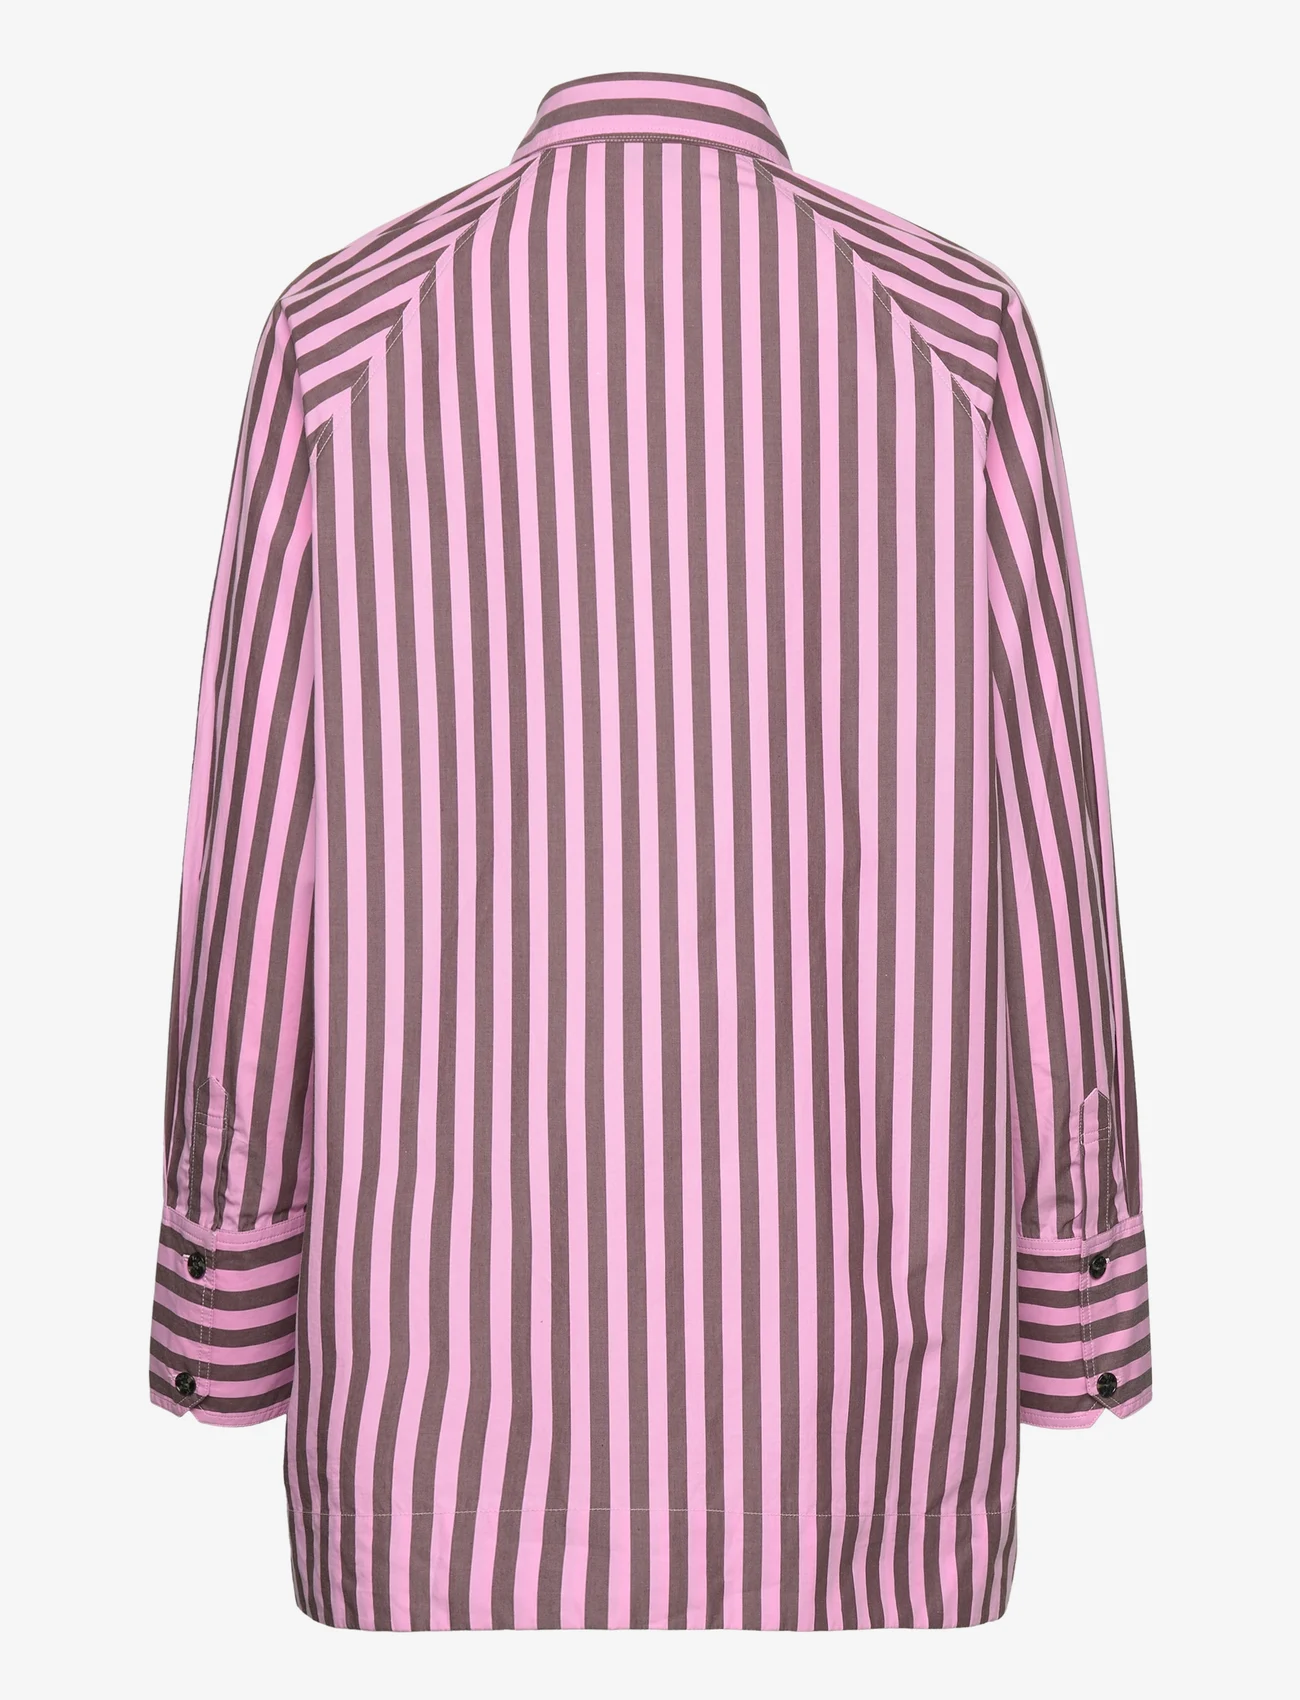 Ganni - Stripe Cotton Oversize Raglan Shirt - long-sleeved shirts - bonbon - 1